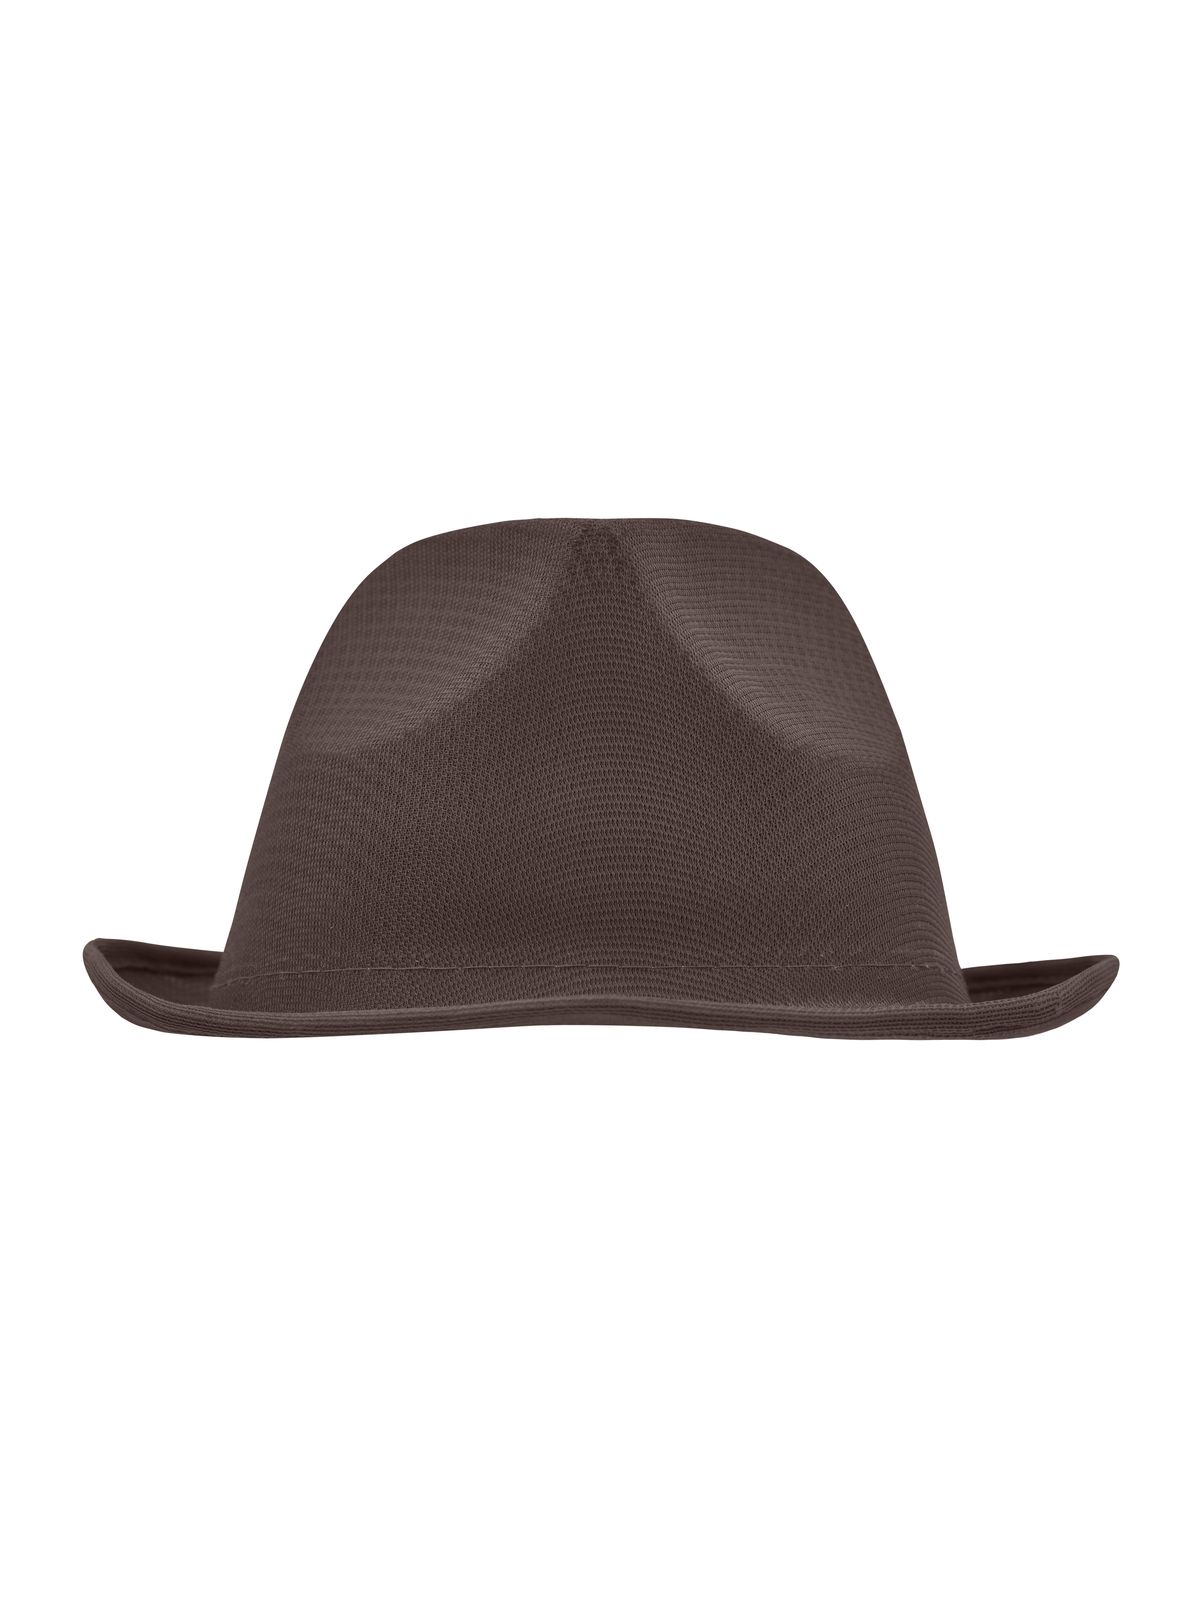 promotion-hat-dark-brown.webp